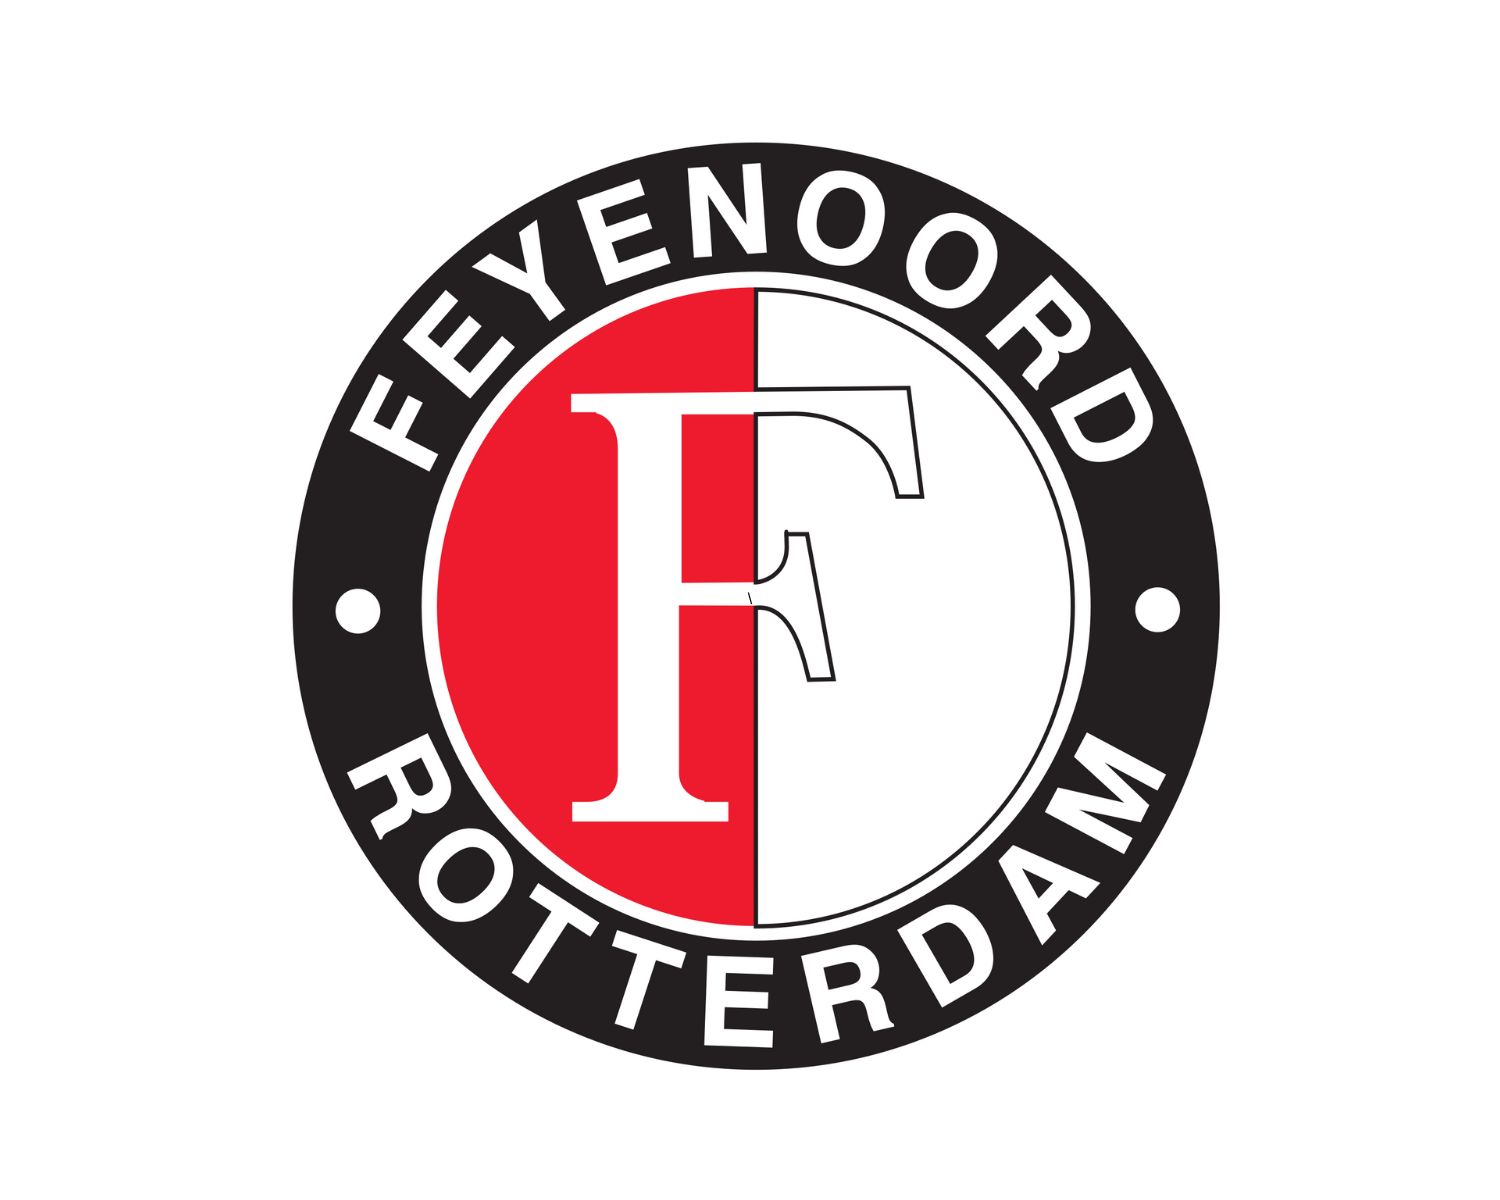 feyenoord-rotterdam-14-football-club-facts